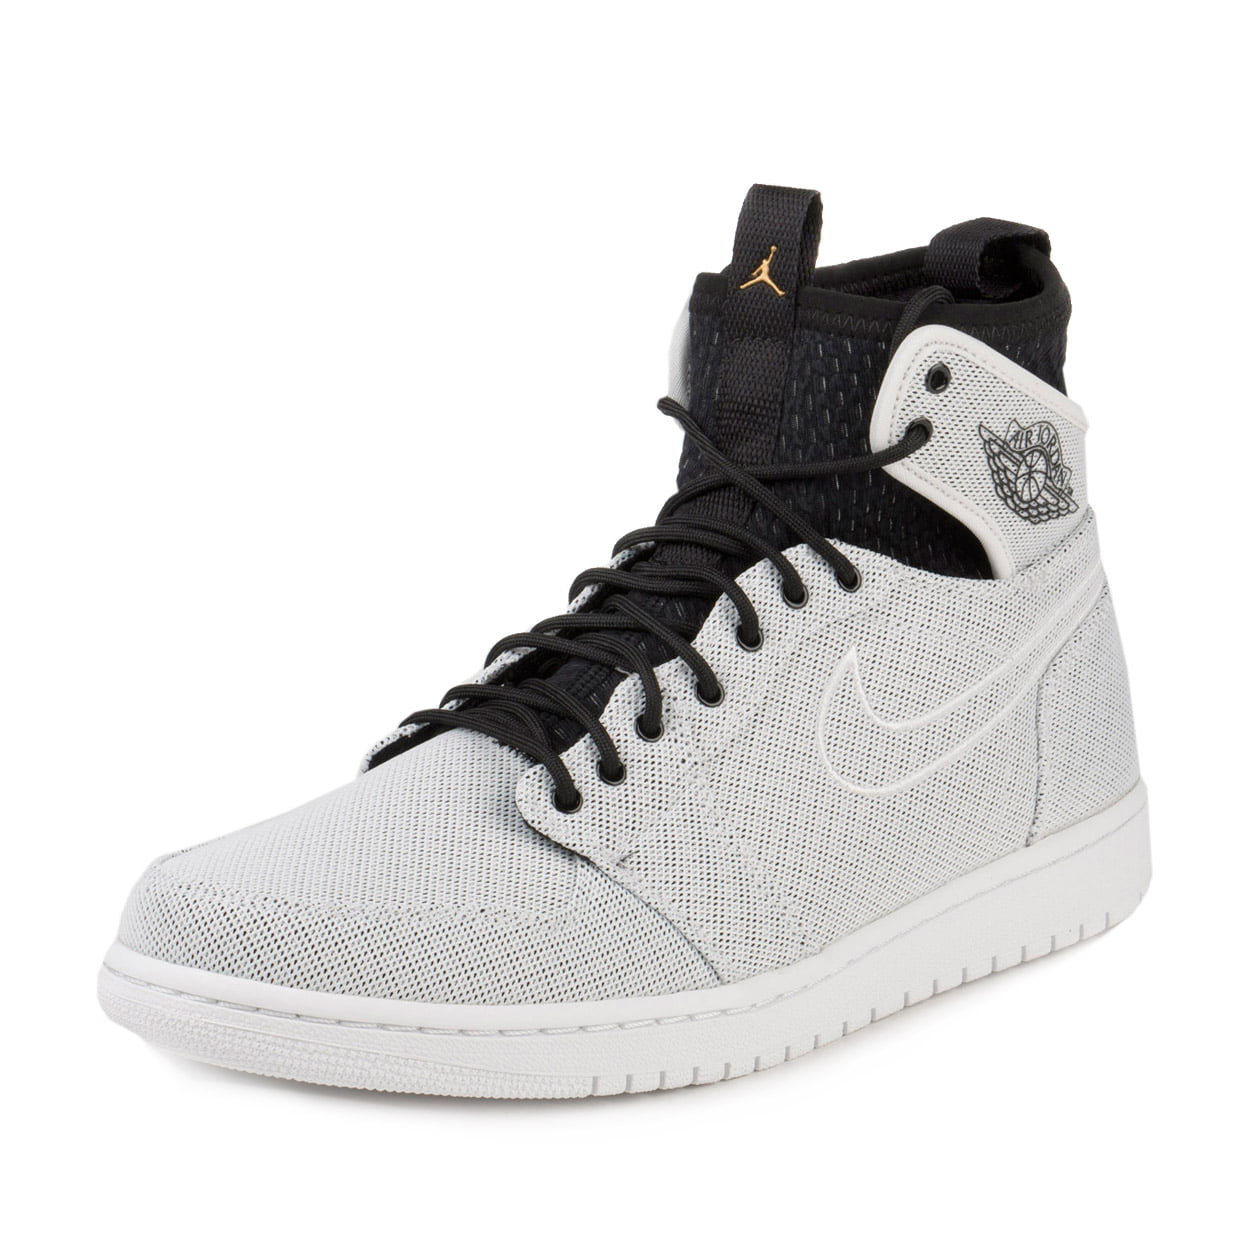 Nike Mens Air Jordan 1 Retro Ultra High White/Mtcl Gld Cn 844700-132 -  Walmart.com